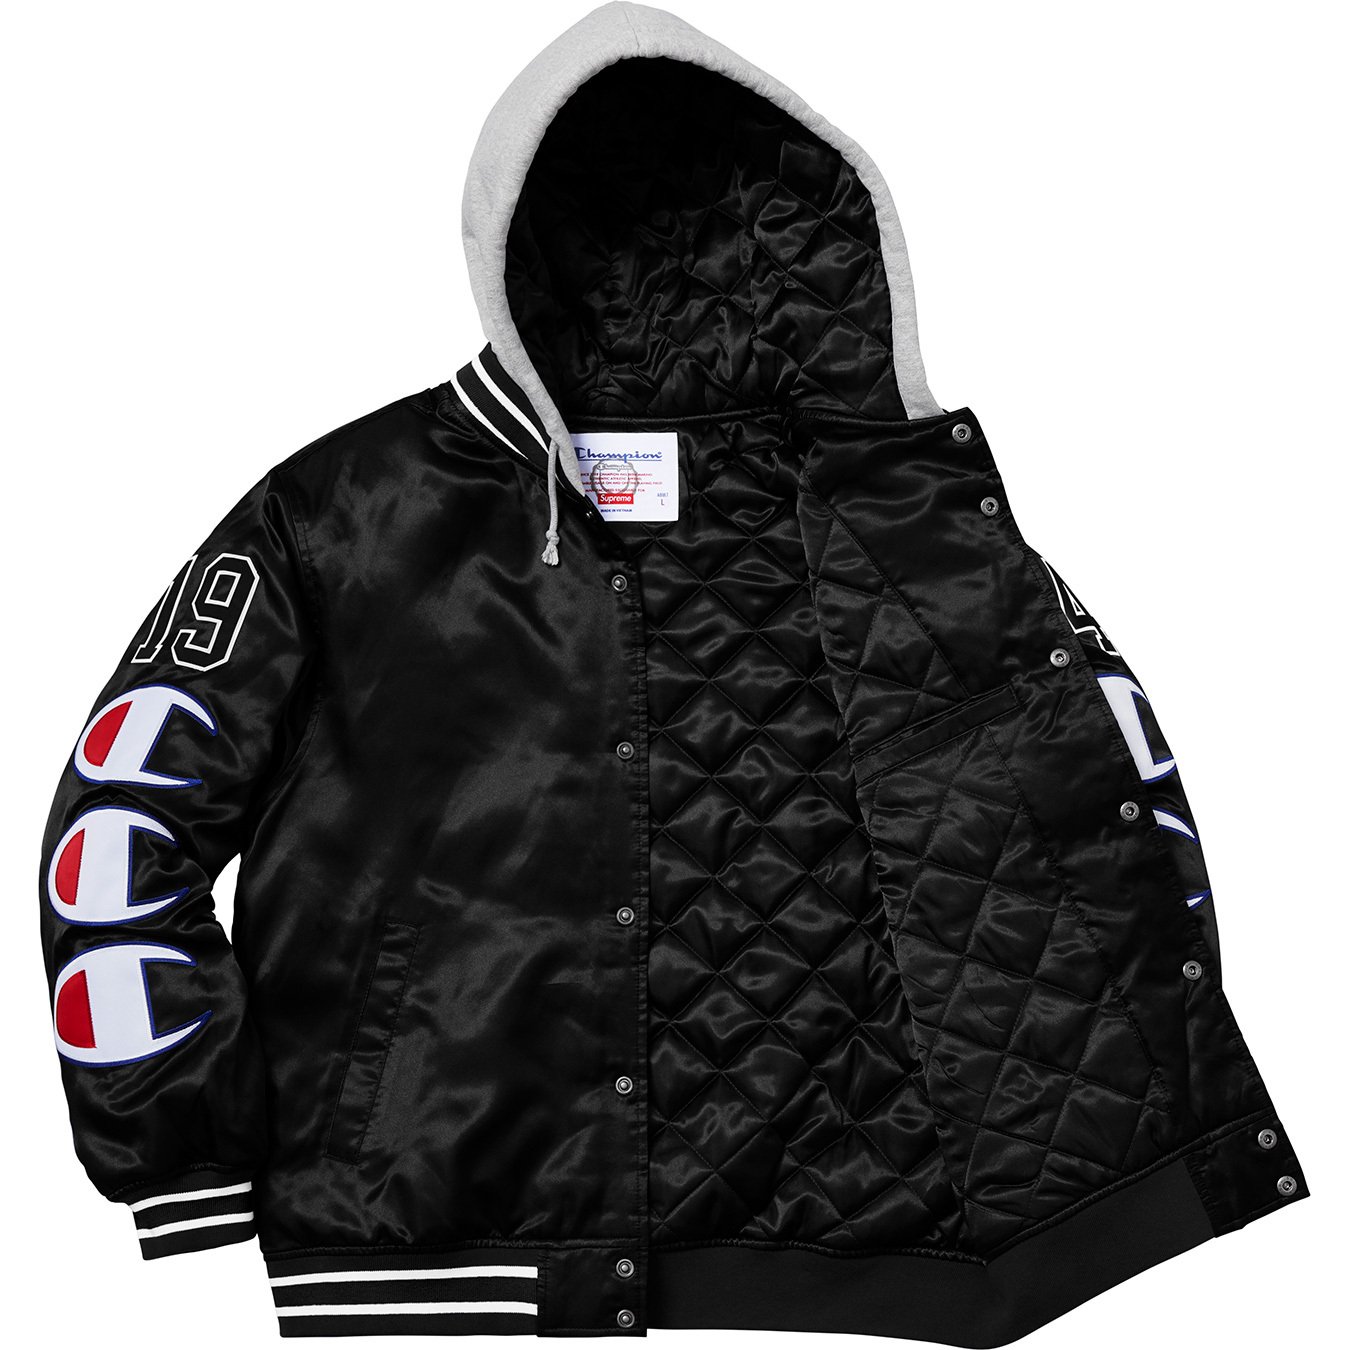 Supreme®/Champion® Hooded Satin Varsity Jacket - Supreme Community